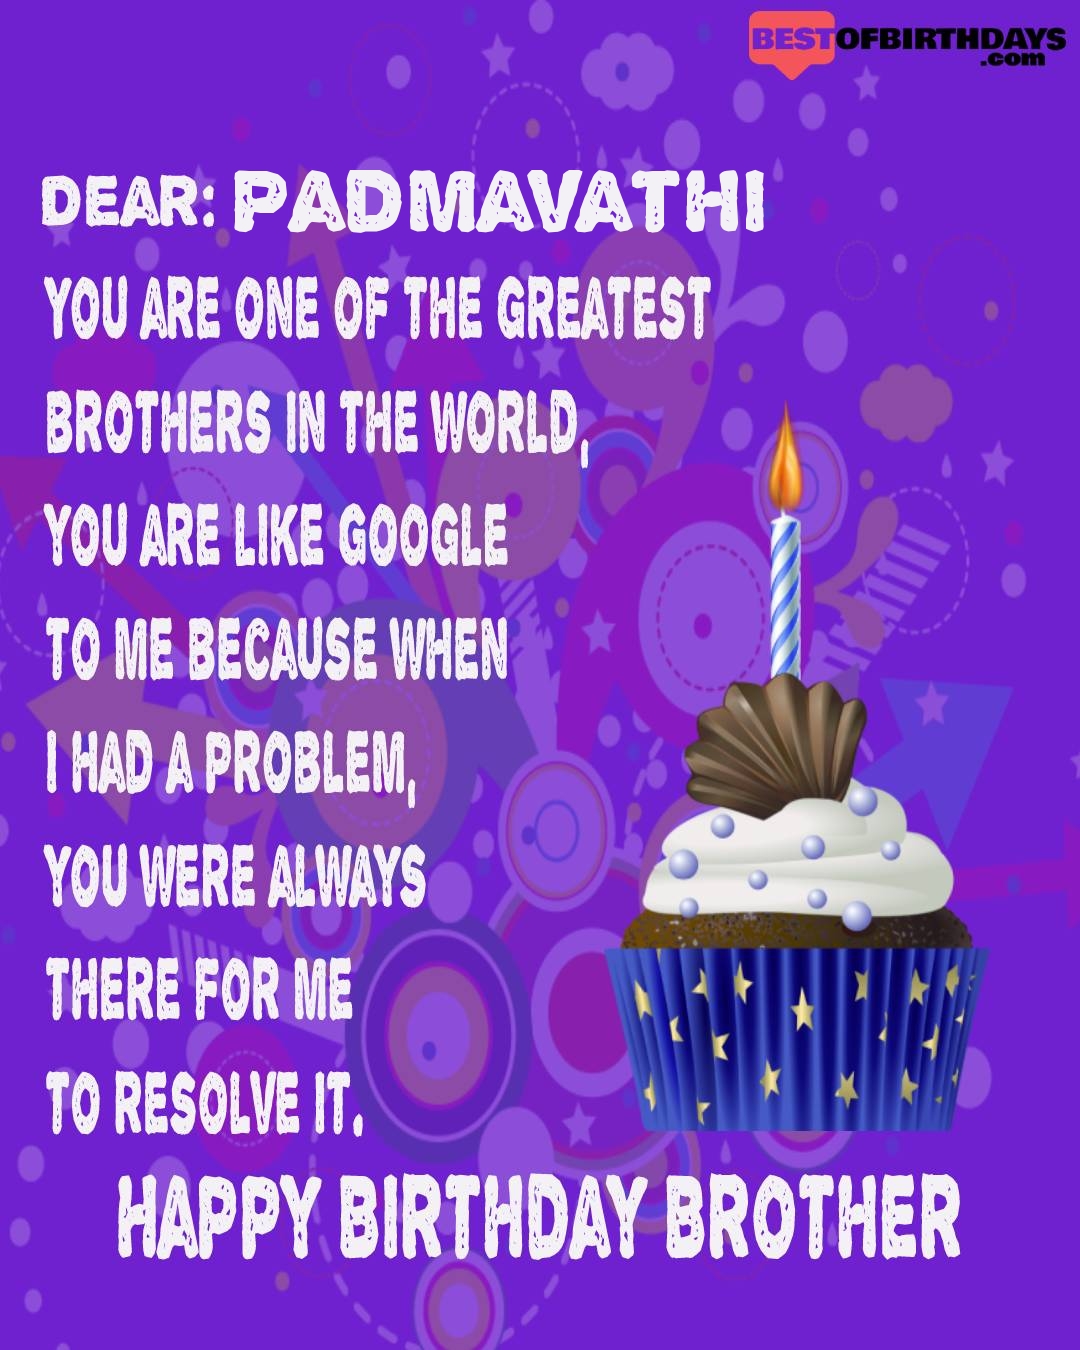 Happy birthday padmavathi bhai brother bro